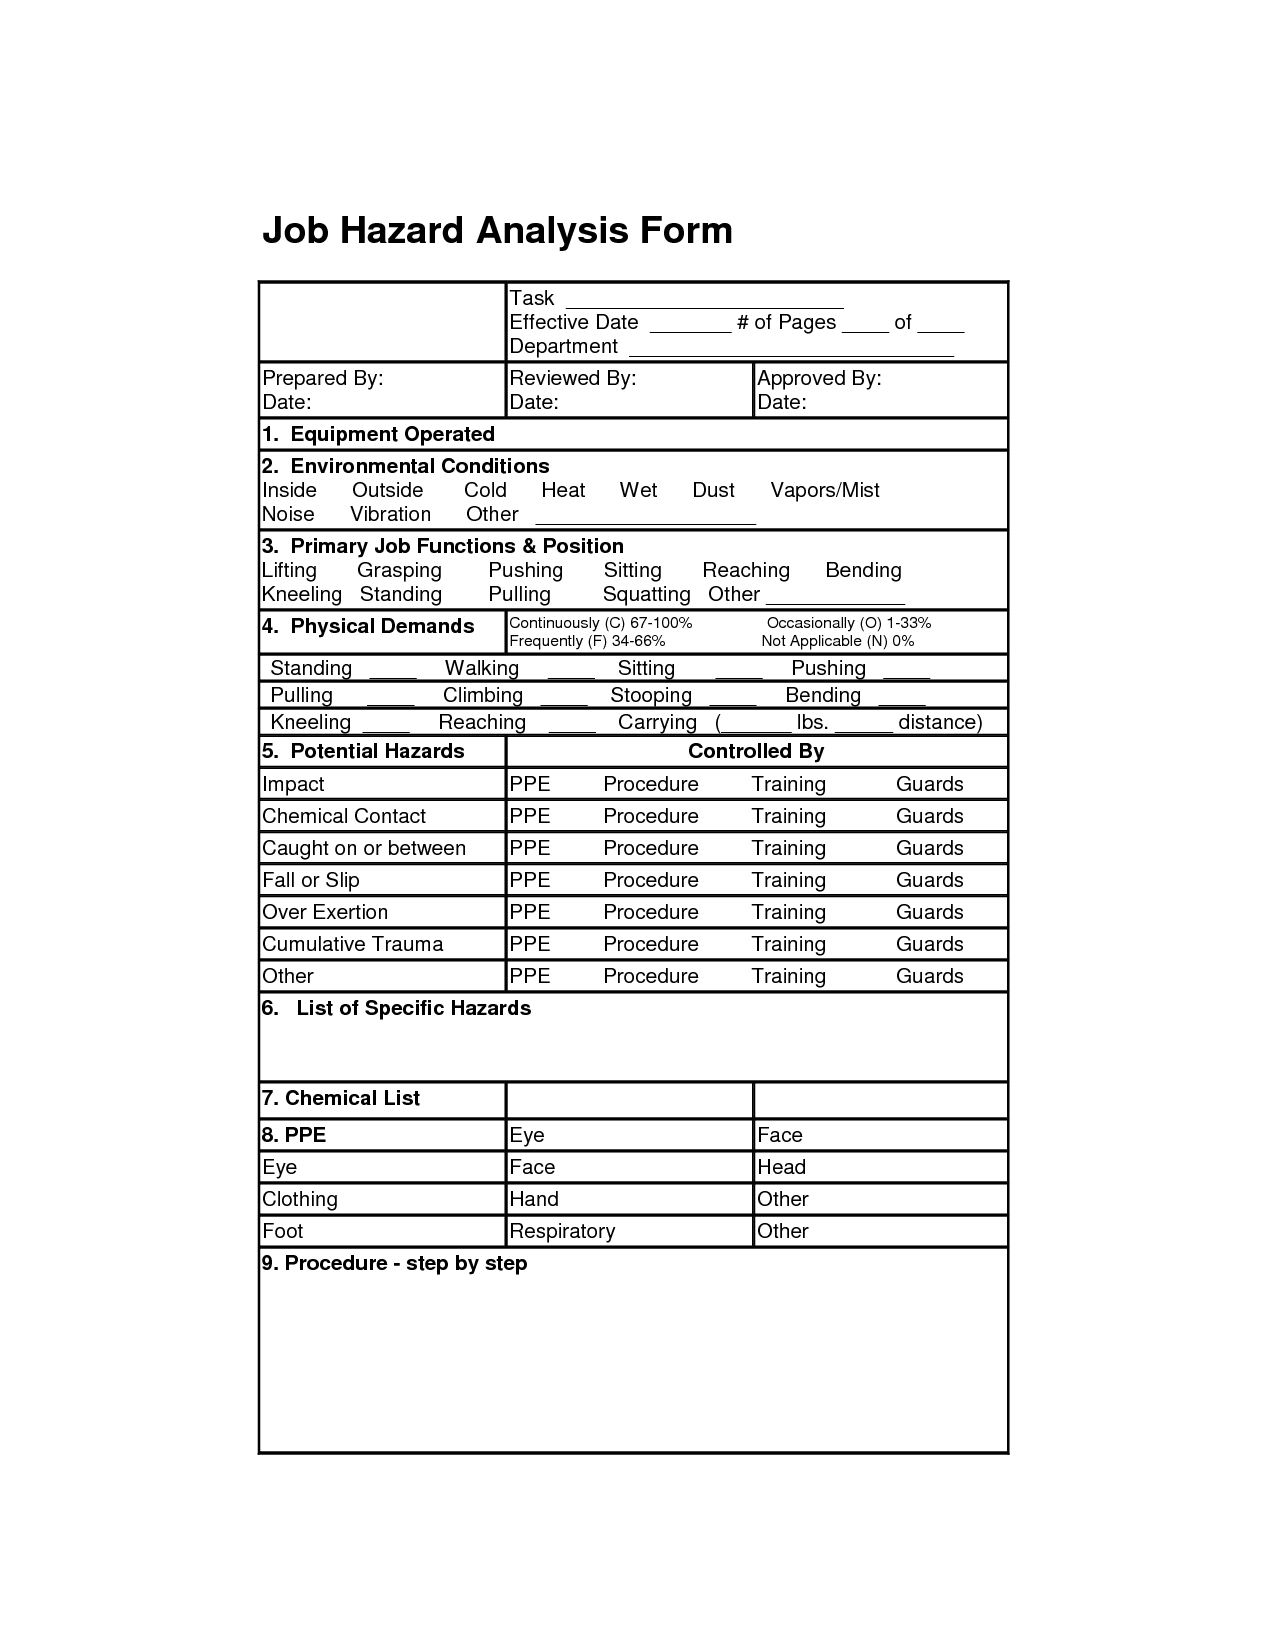 Job Hazard Analysis Form | Job Analysis, Daily Checklist Regarding Safety Analysis Report Template